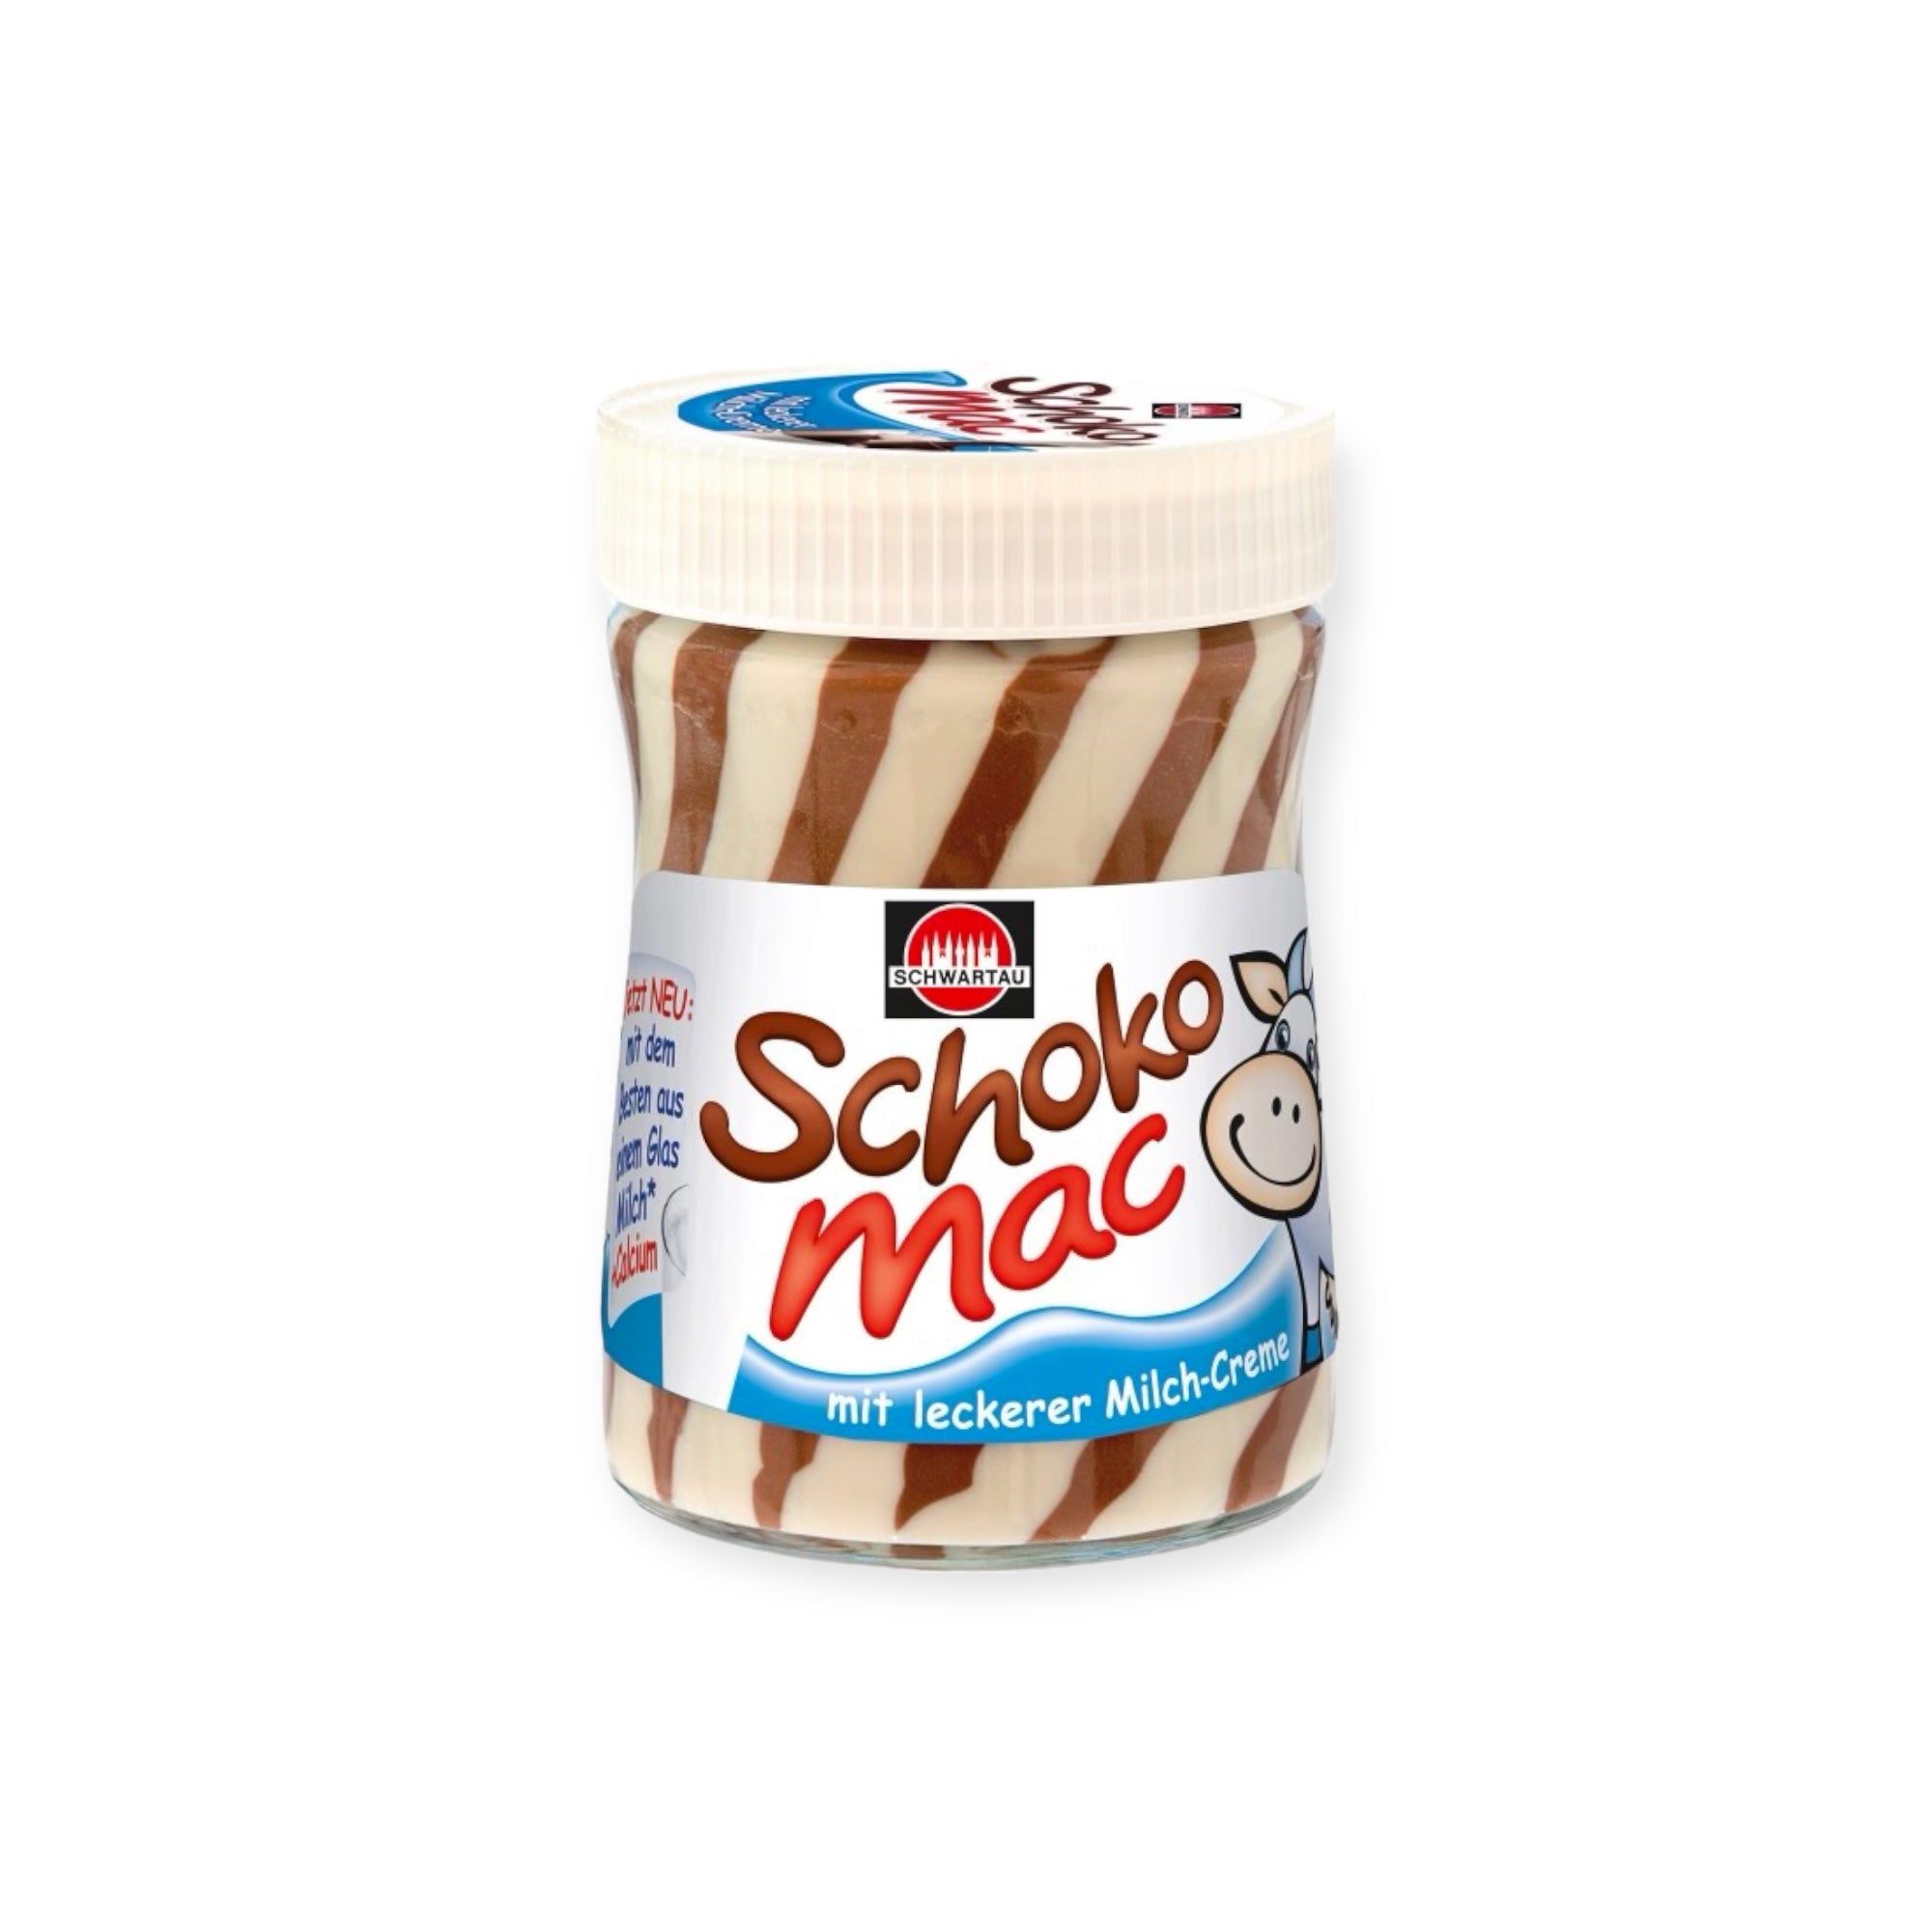 Schwartau Schoko Mac chocolate milk cream spread 400g